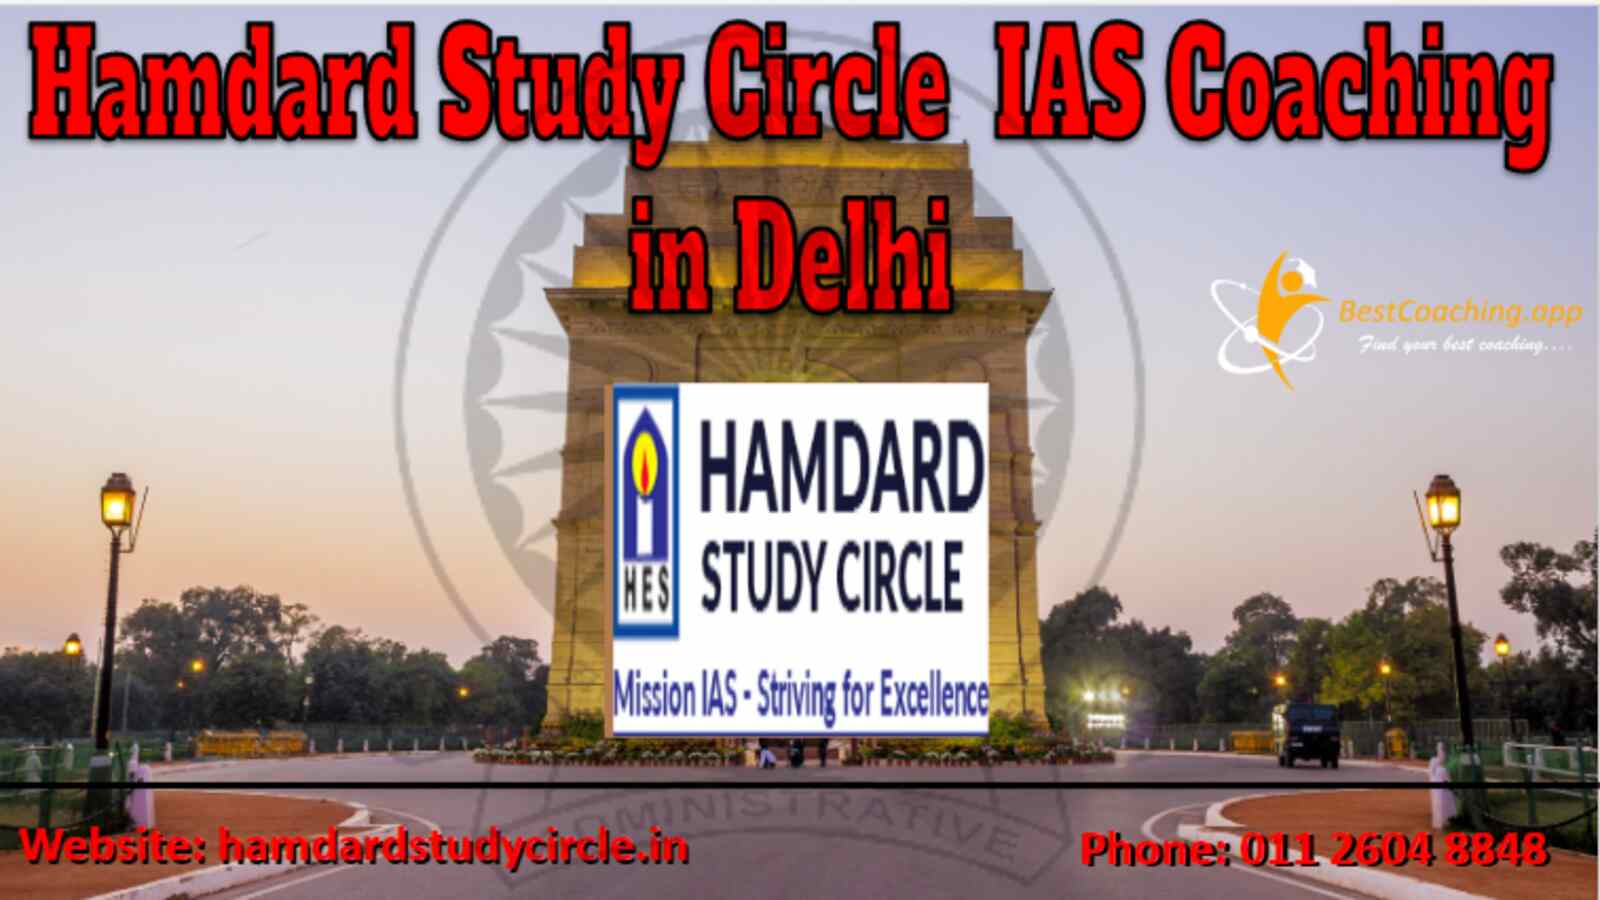 Hamdard Study Circle IAS Coaching